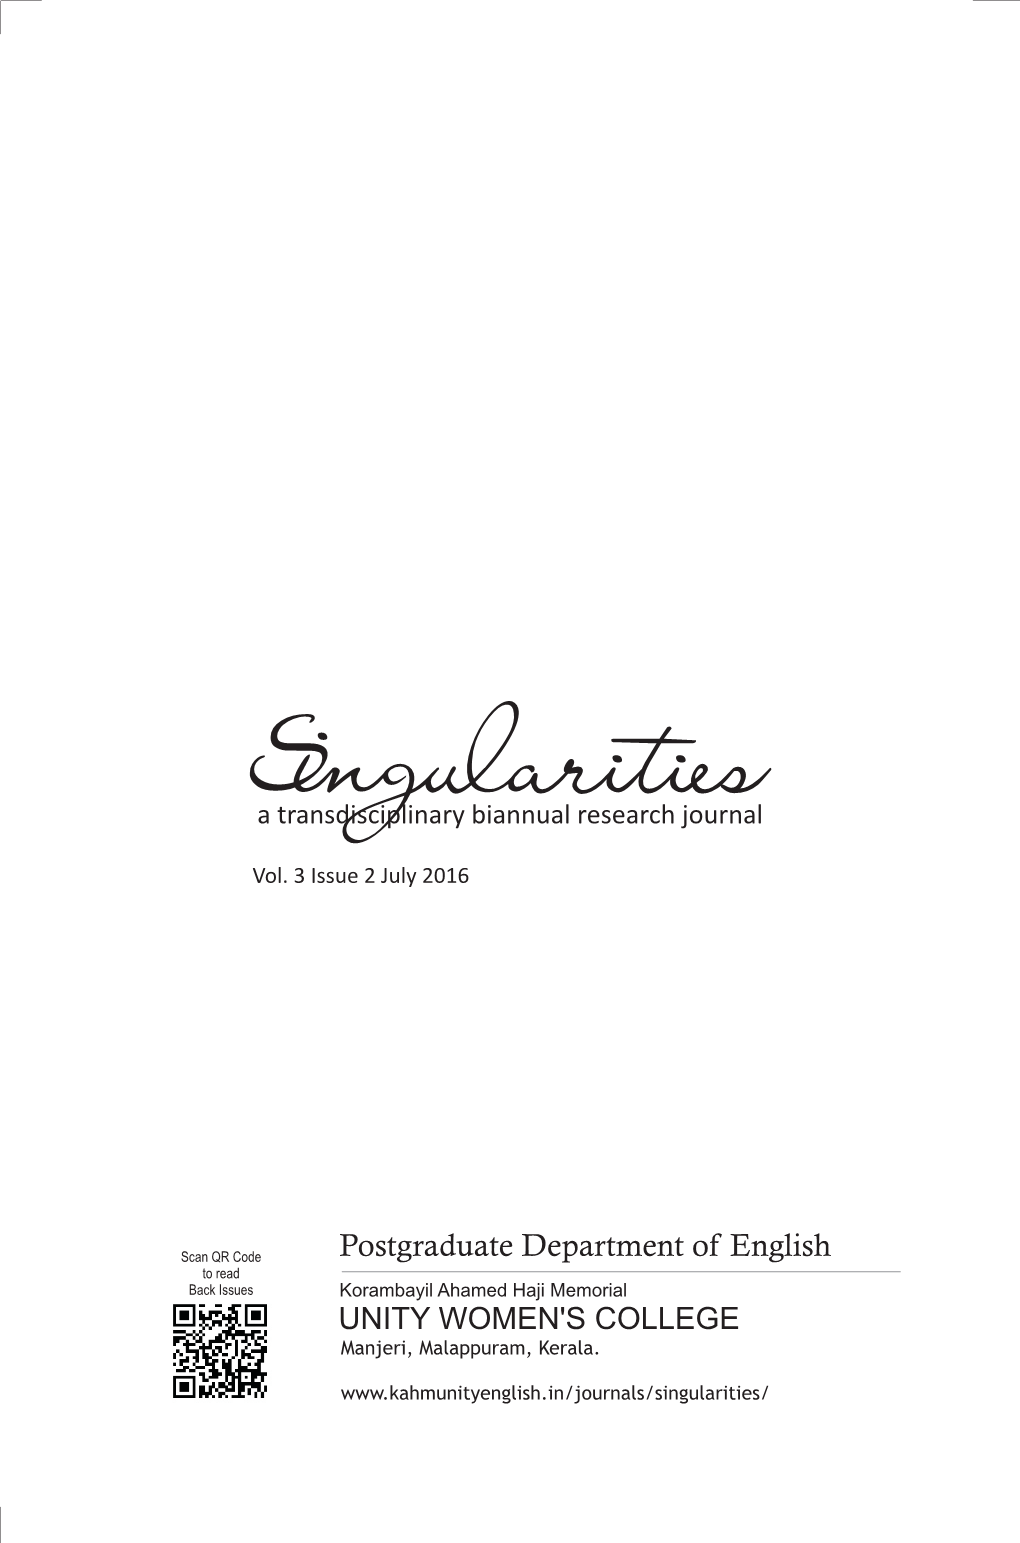 Singularities-Vol-3-Issue-2